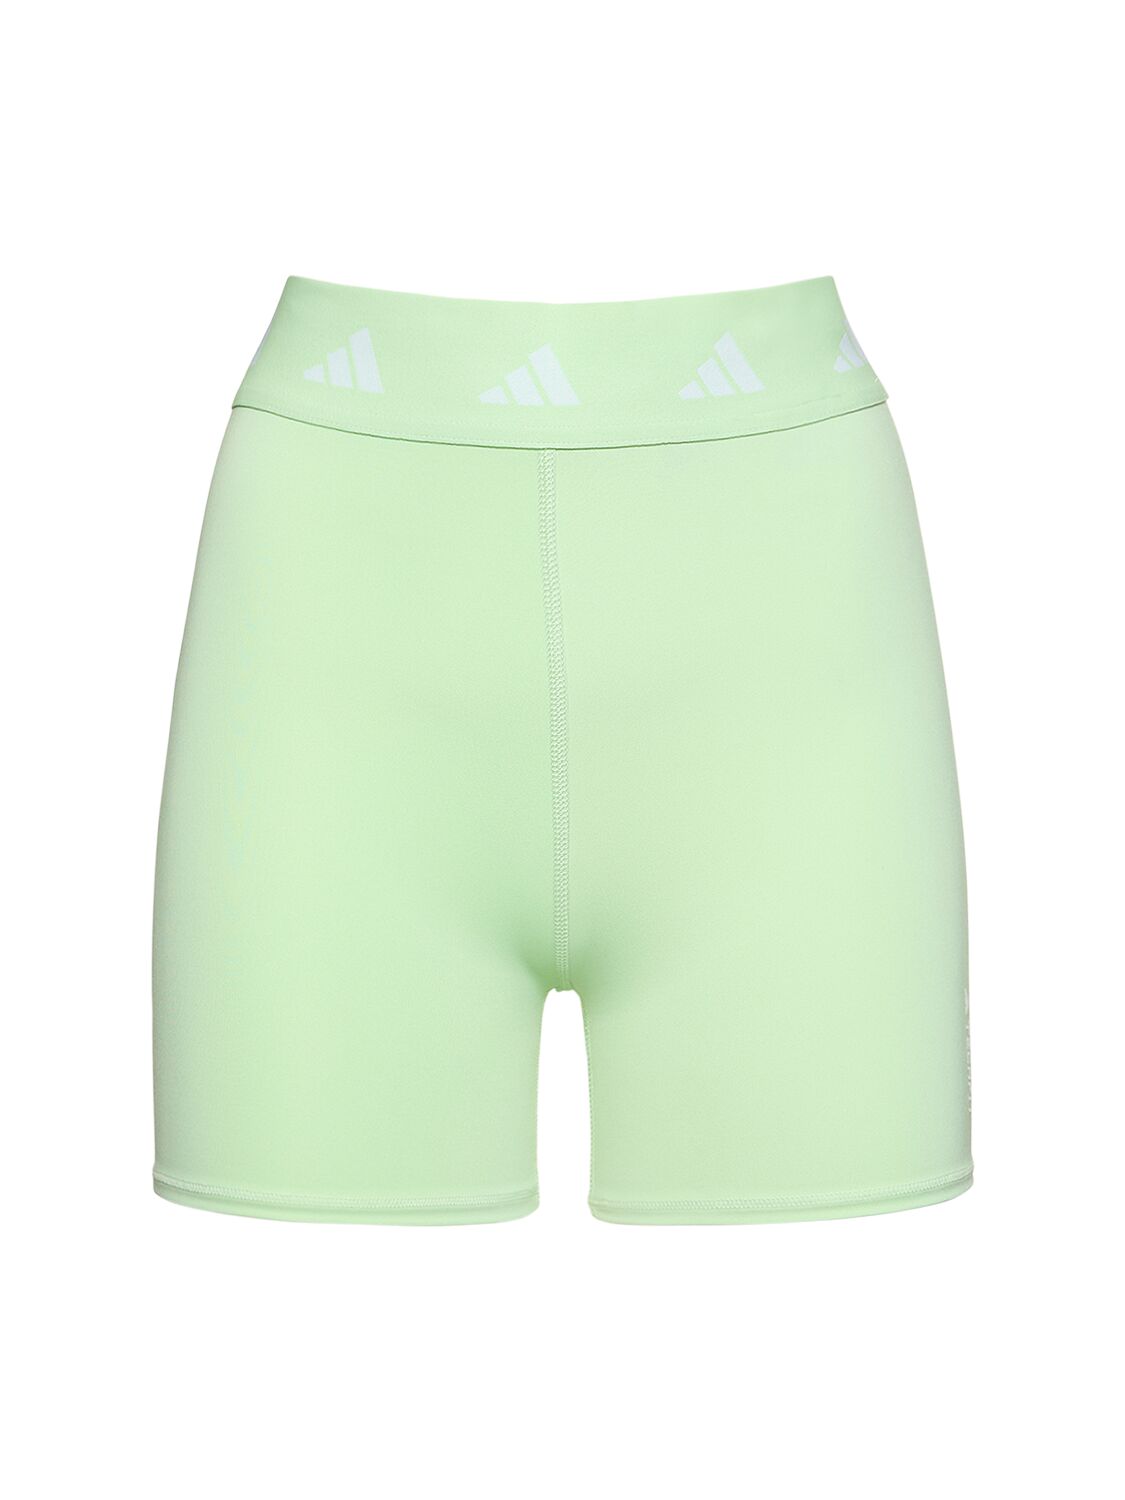 Adidas Originals Techfit Shorts In Light Green